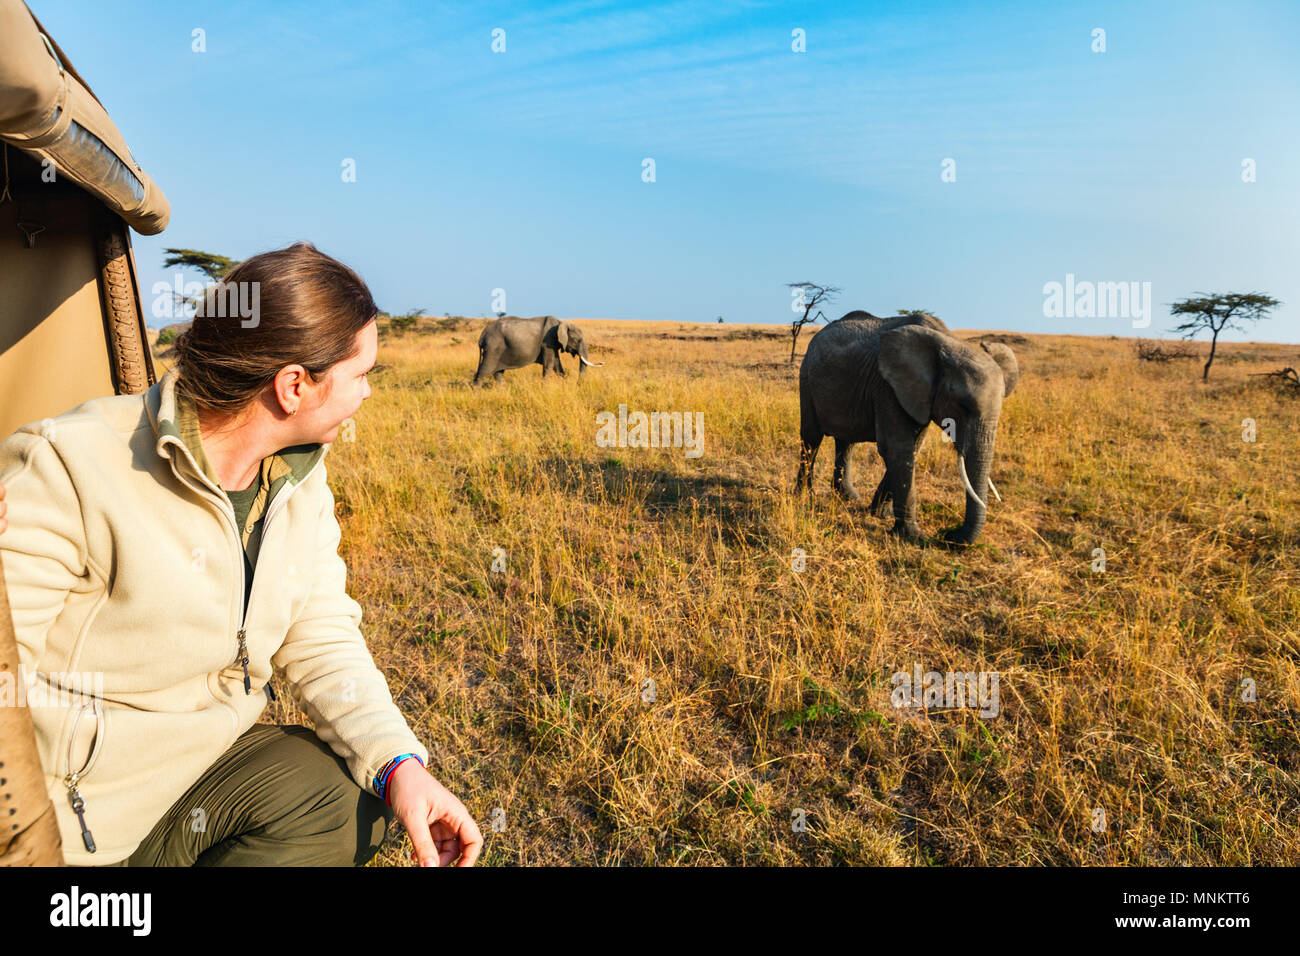 Woman on safari game drive enjoying close encounter with elephants in Kenya Africa Stock Photo